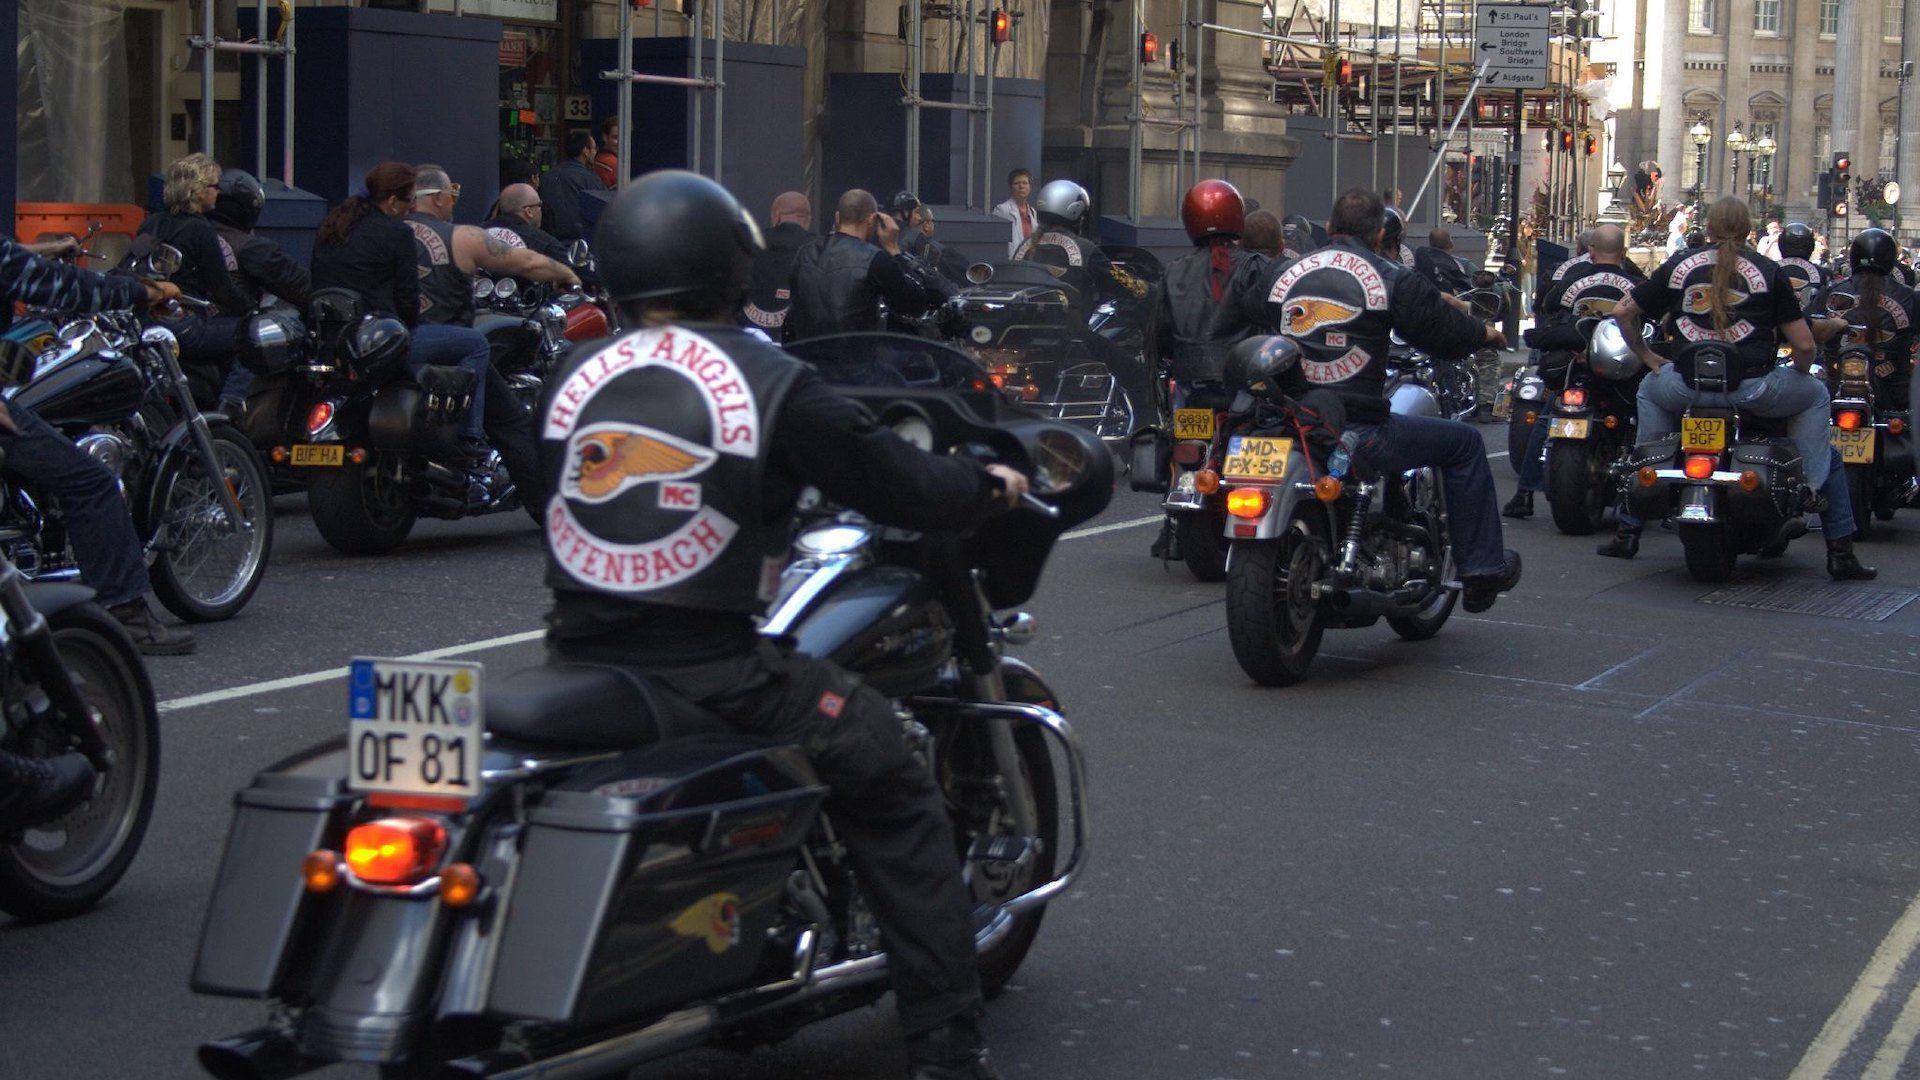 hells angels motorcycle club in downtown london